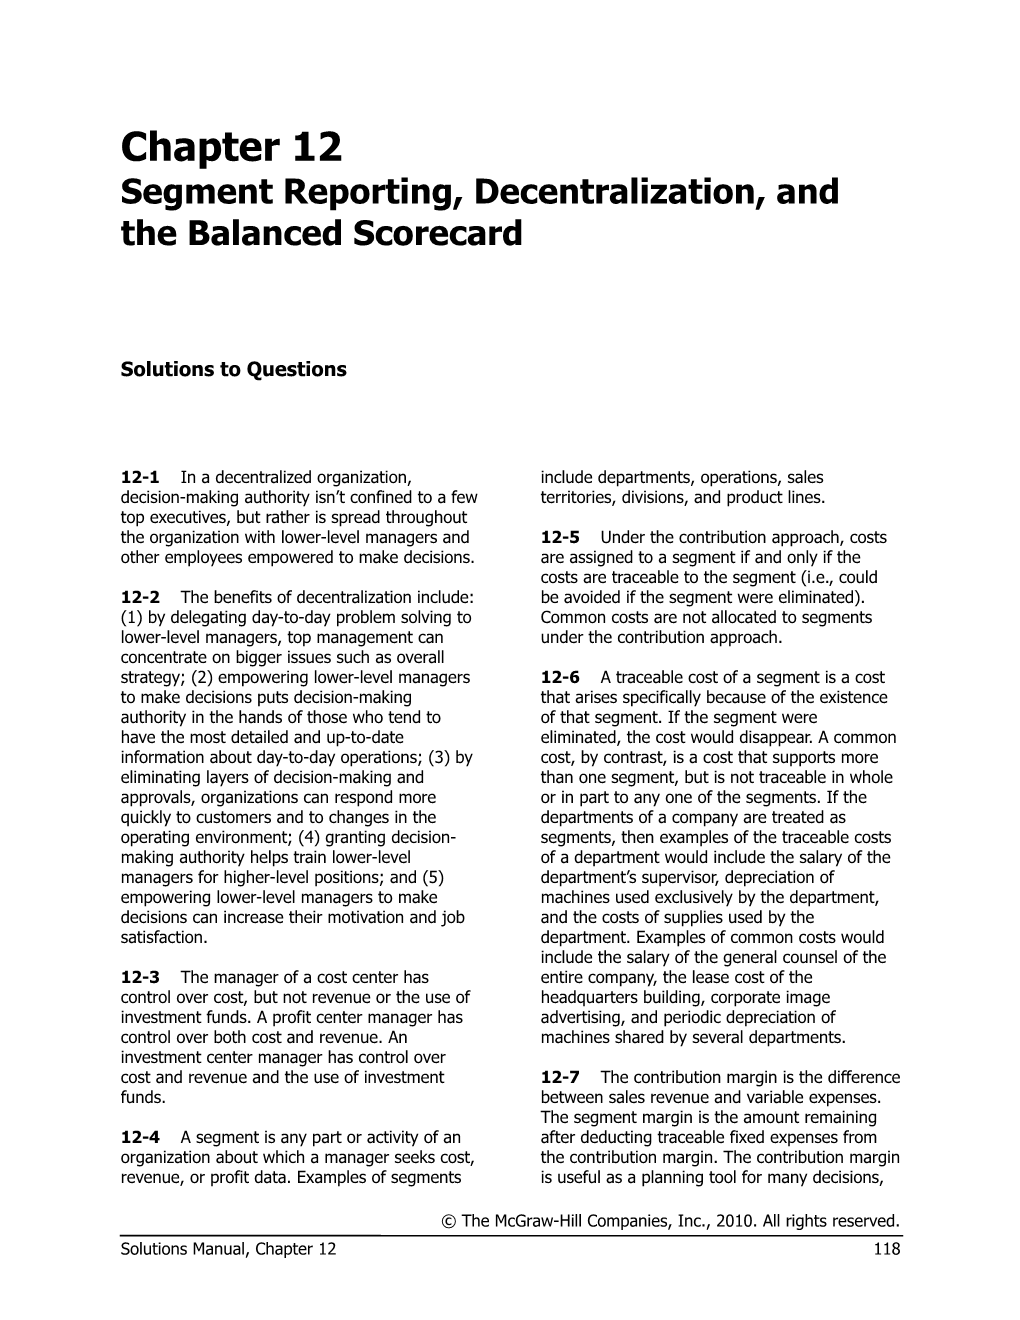 Segment Reporting, Decentralization, and the Balanced Scorecard